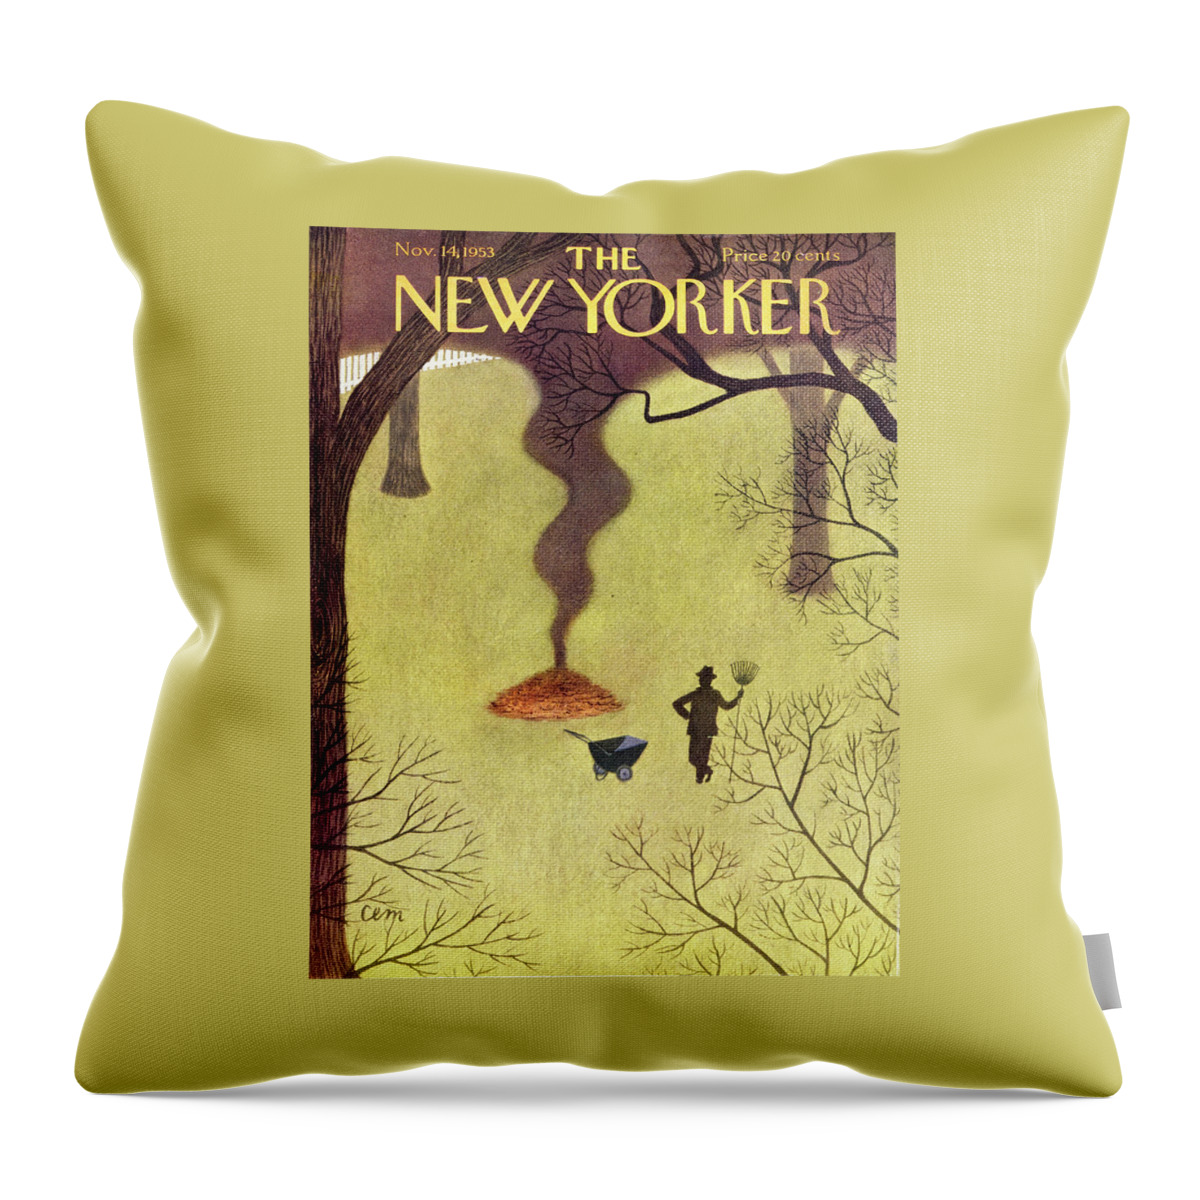 New Yorker November 14 1953 Throw Pillow